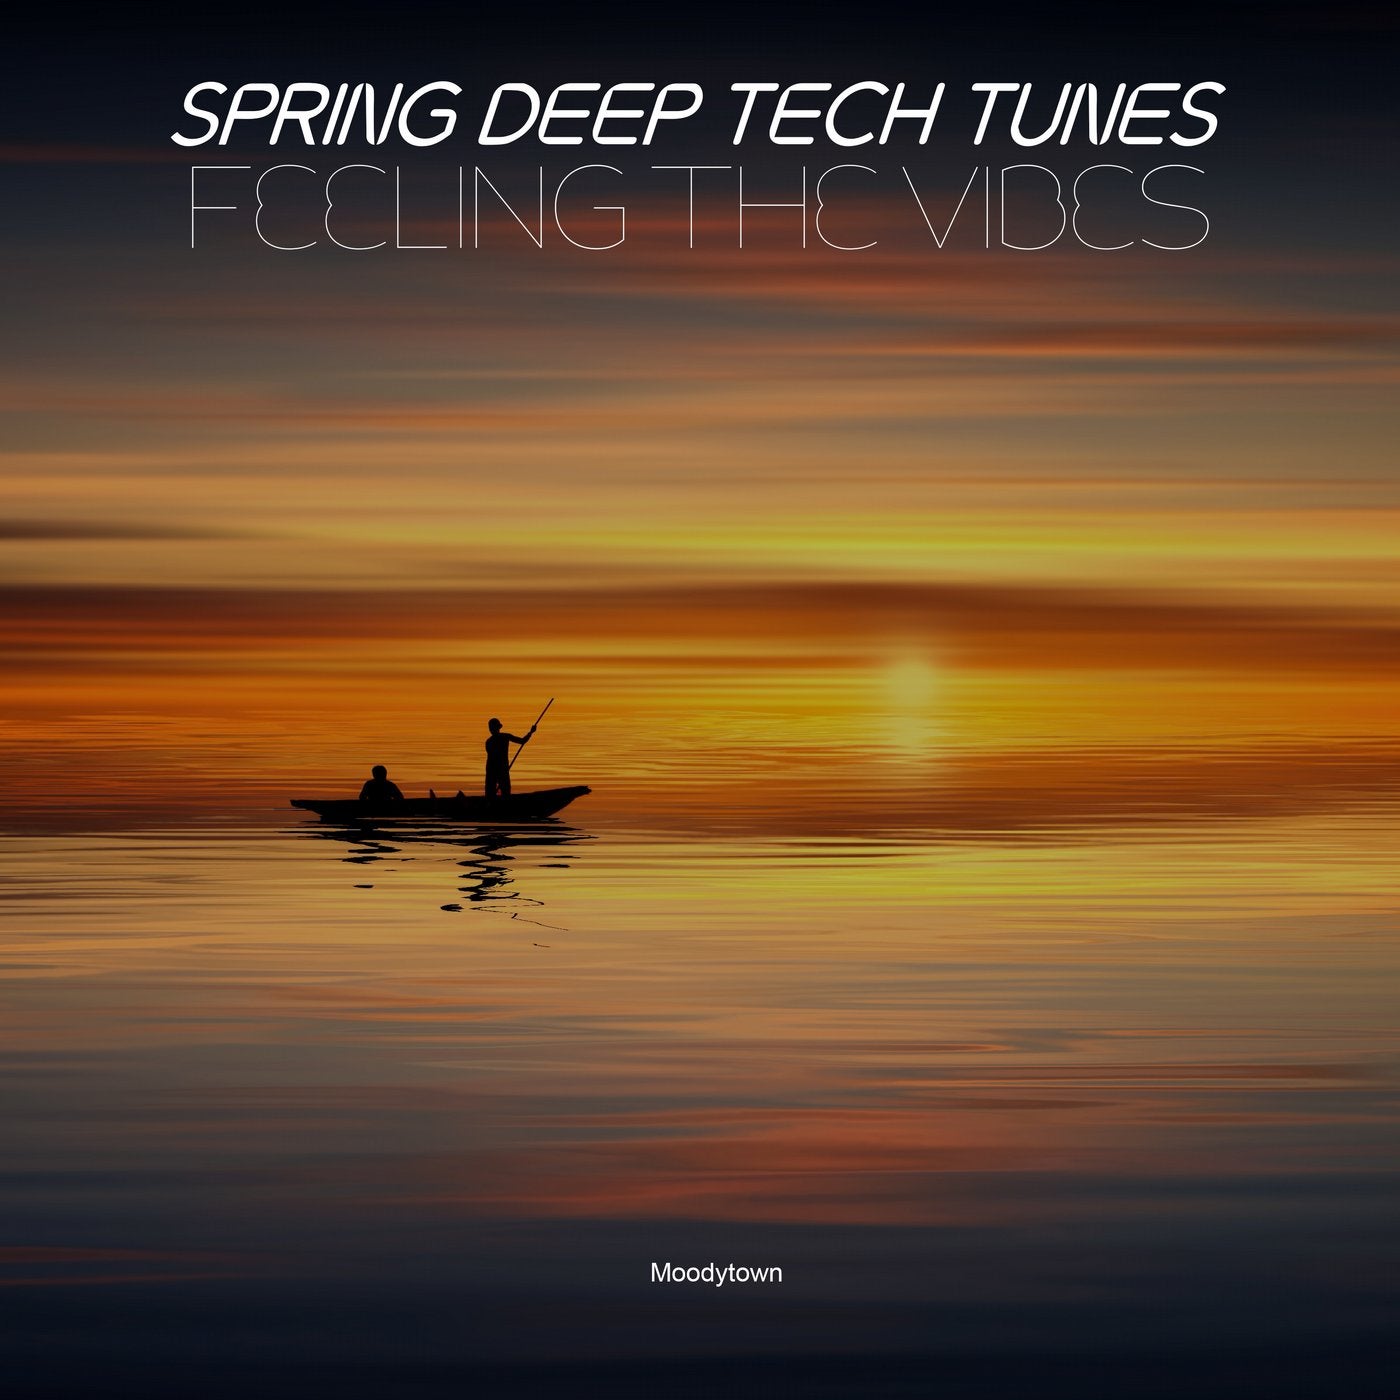 Spring Deep Tech Tunes: Feeling the Vibes